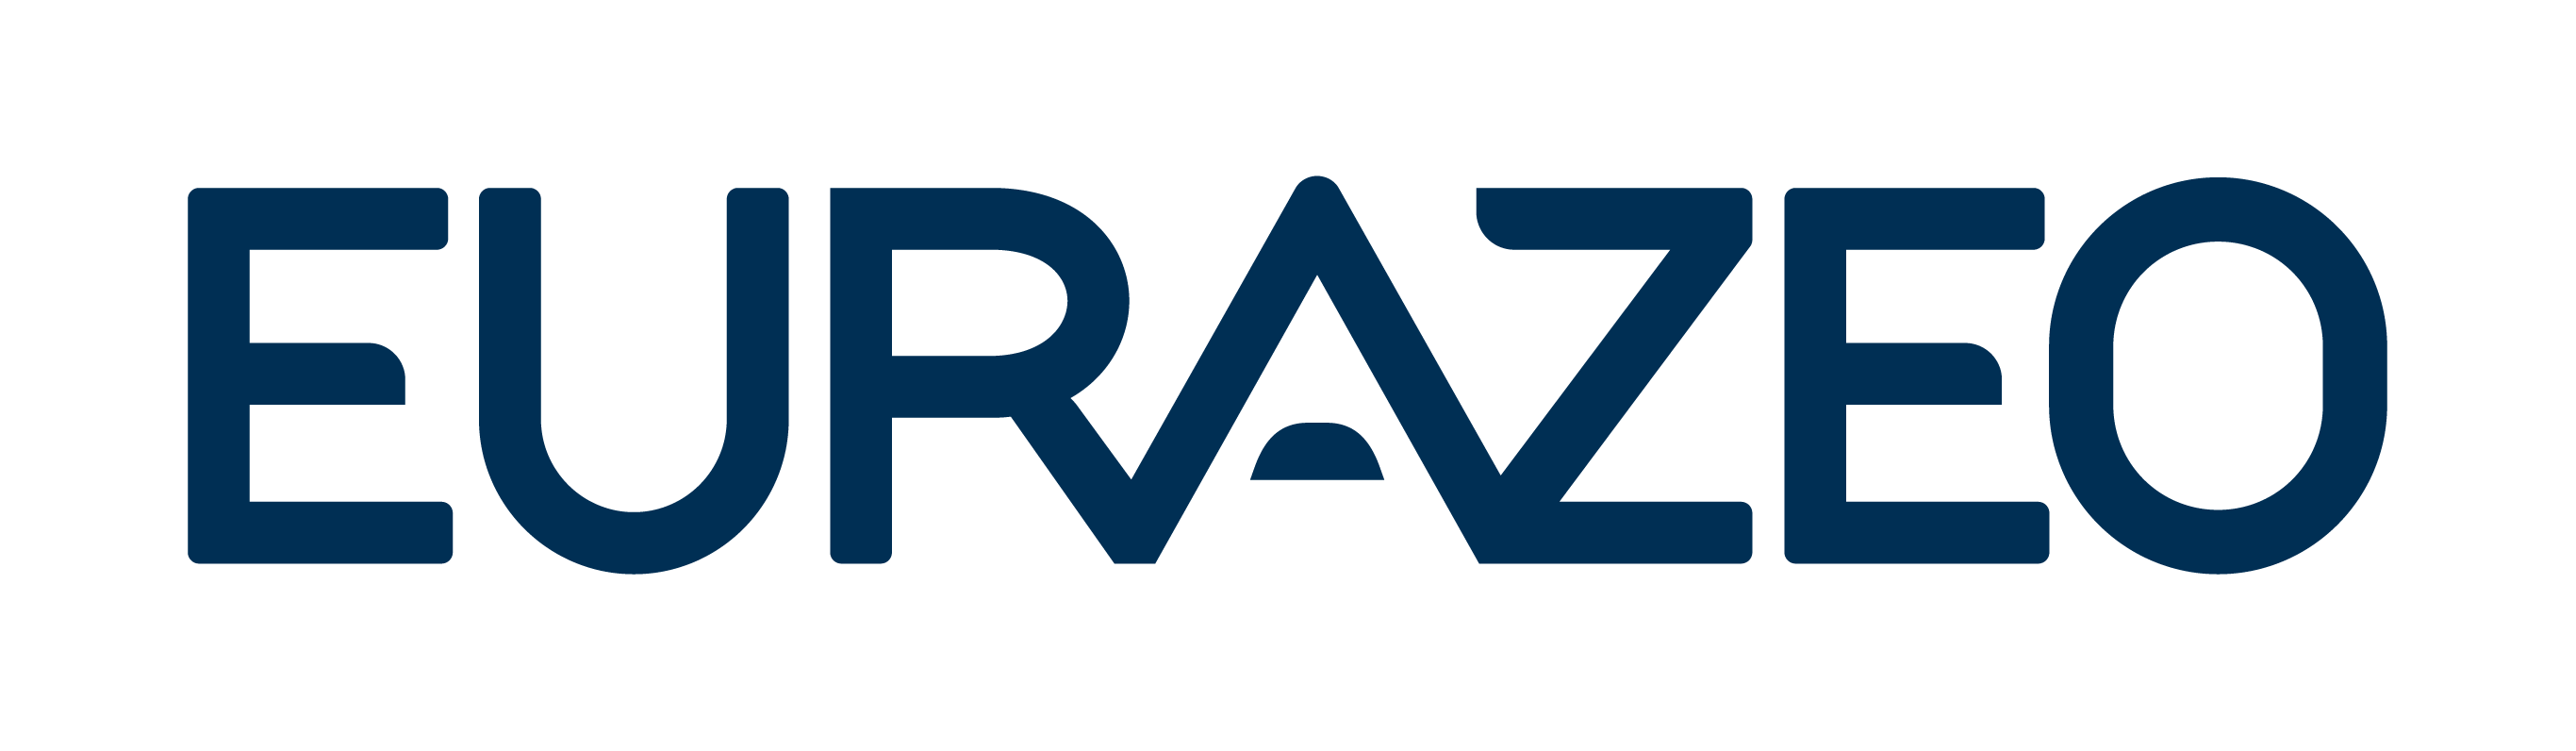 Eurazeo_Logo_RVB